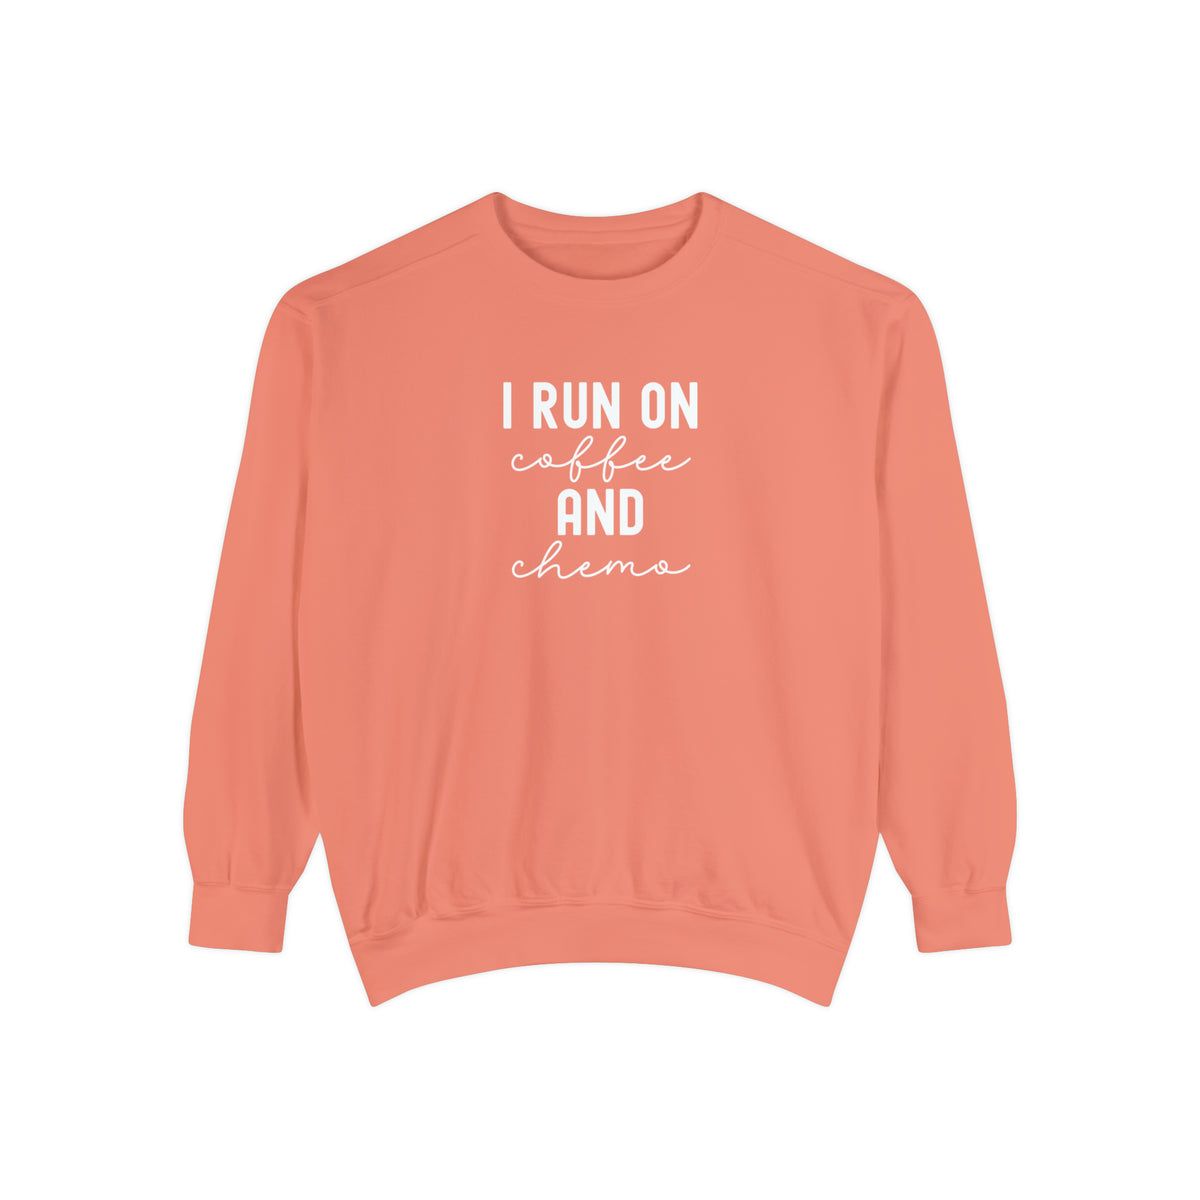 I Run on Coffee and Chemo Sweatshirt